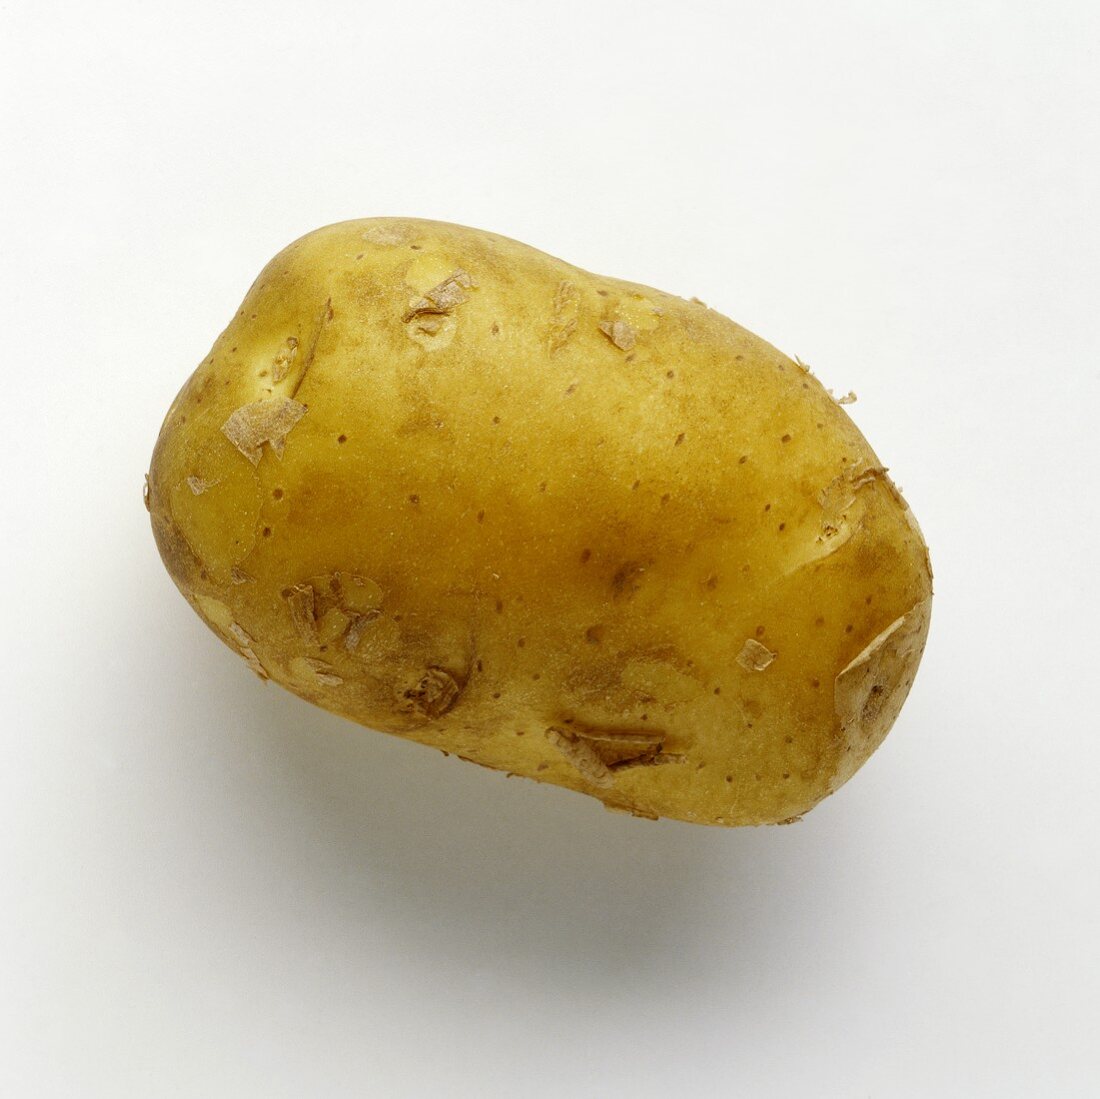 A potato (variety: Sigma)